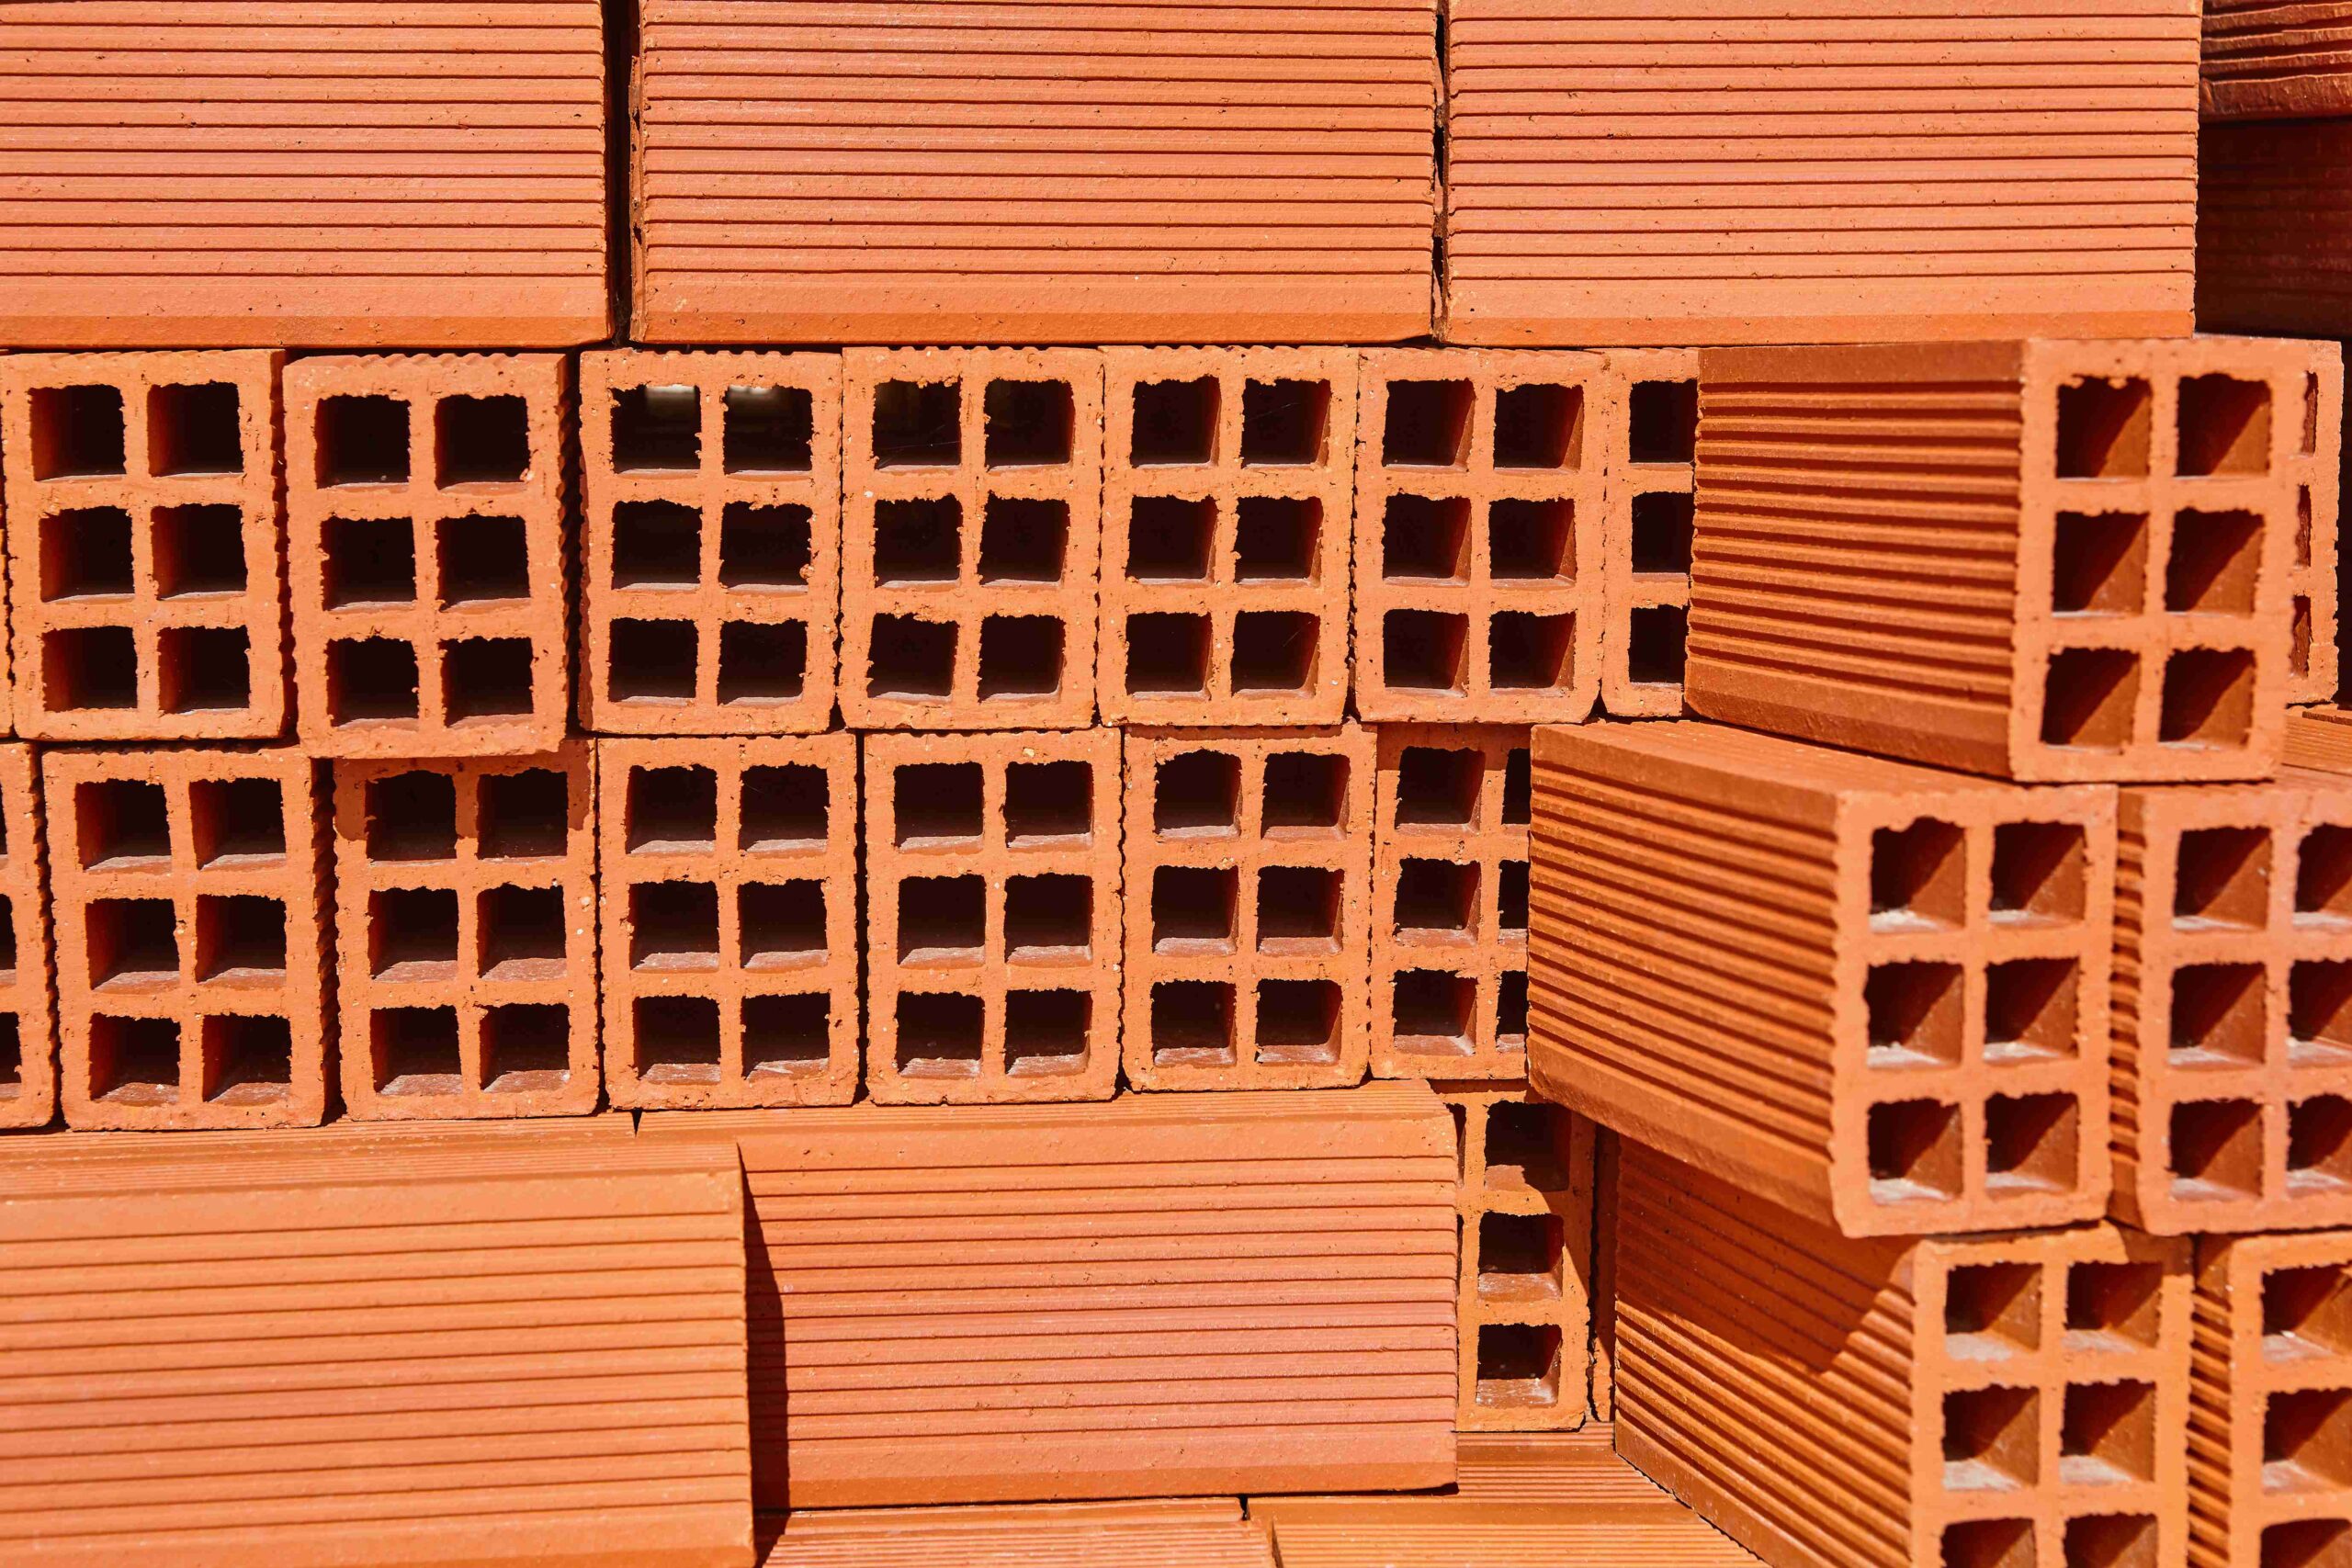 stacked-block-bricks-construction-industry-materi-2022-02-03-01-12-26-utc (1)